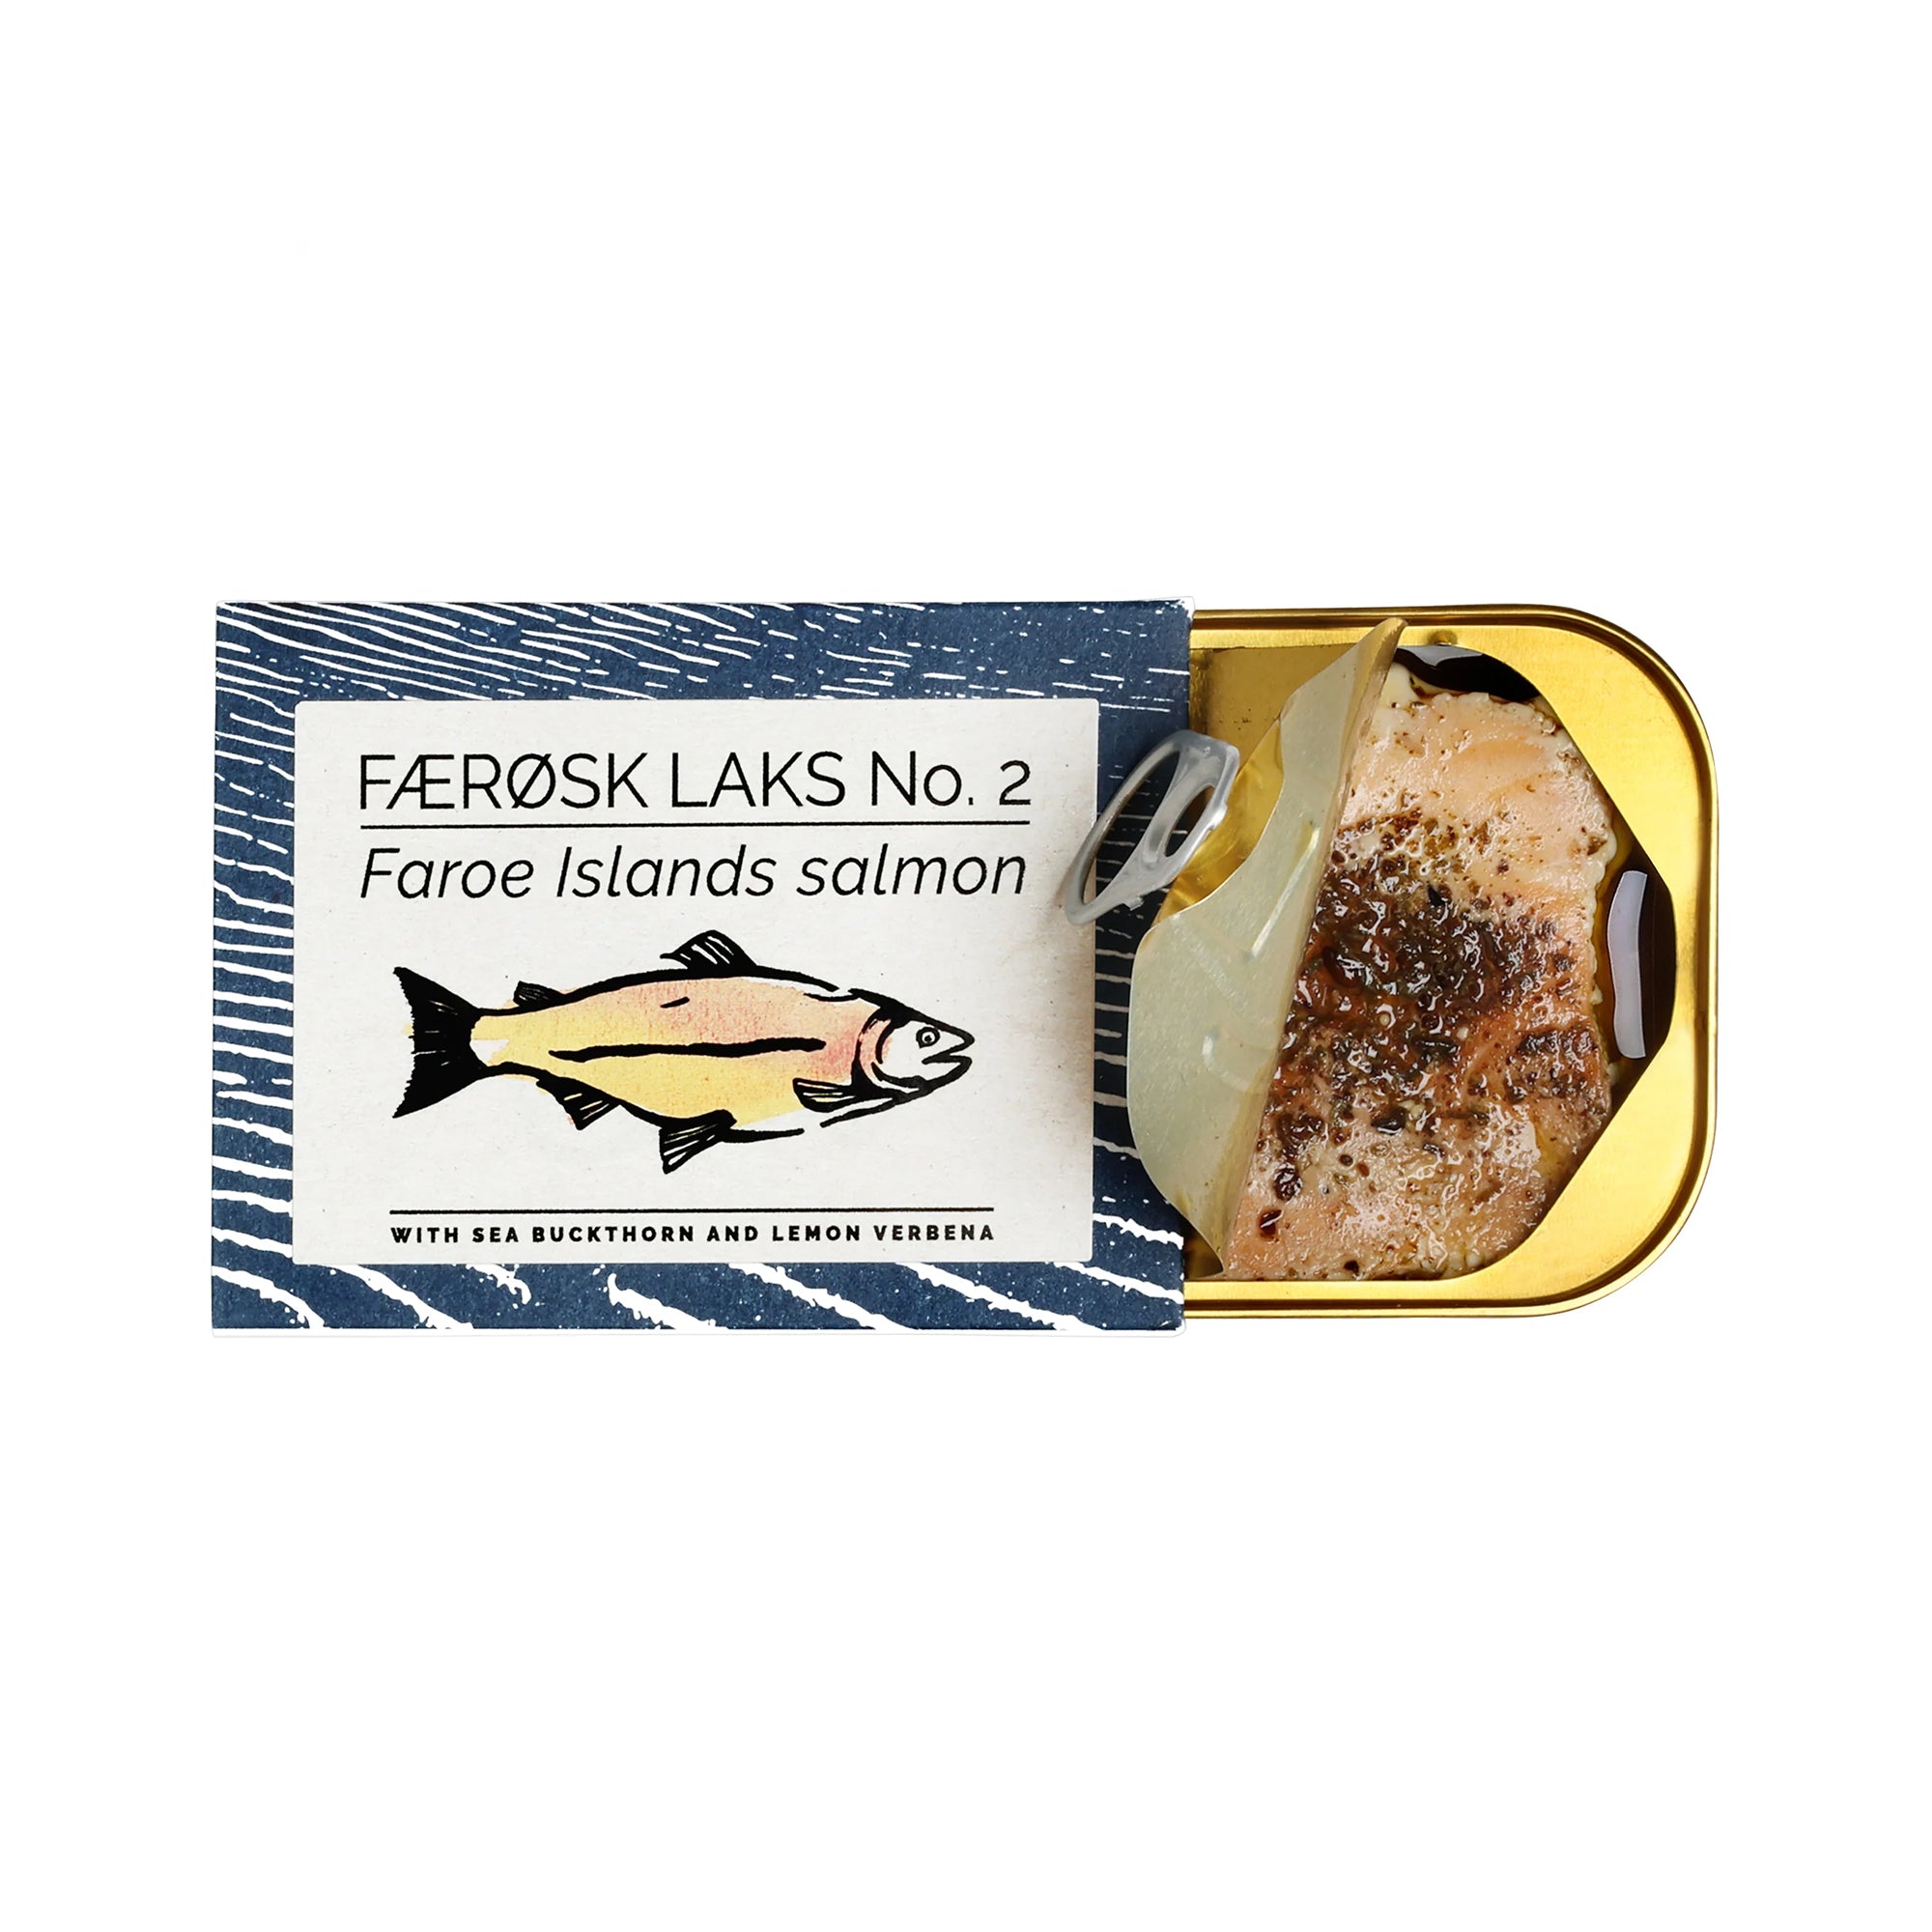 Færøsk Laks No. 2 Faroe Islands Salmon with Sea Buckthorn + Lemon Verbena